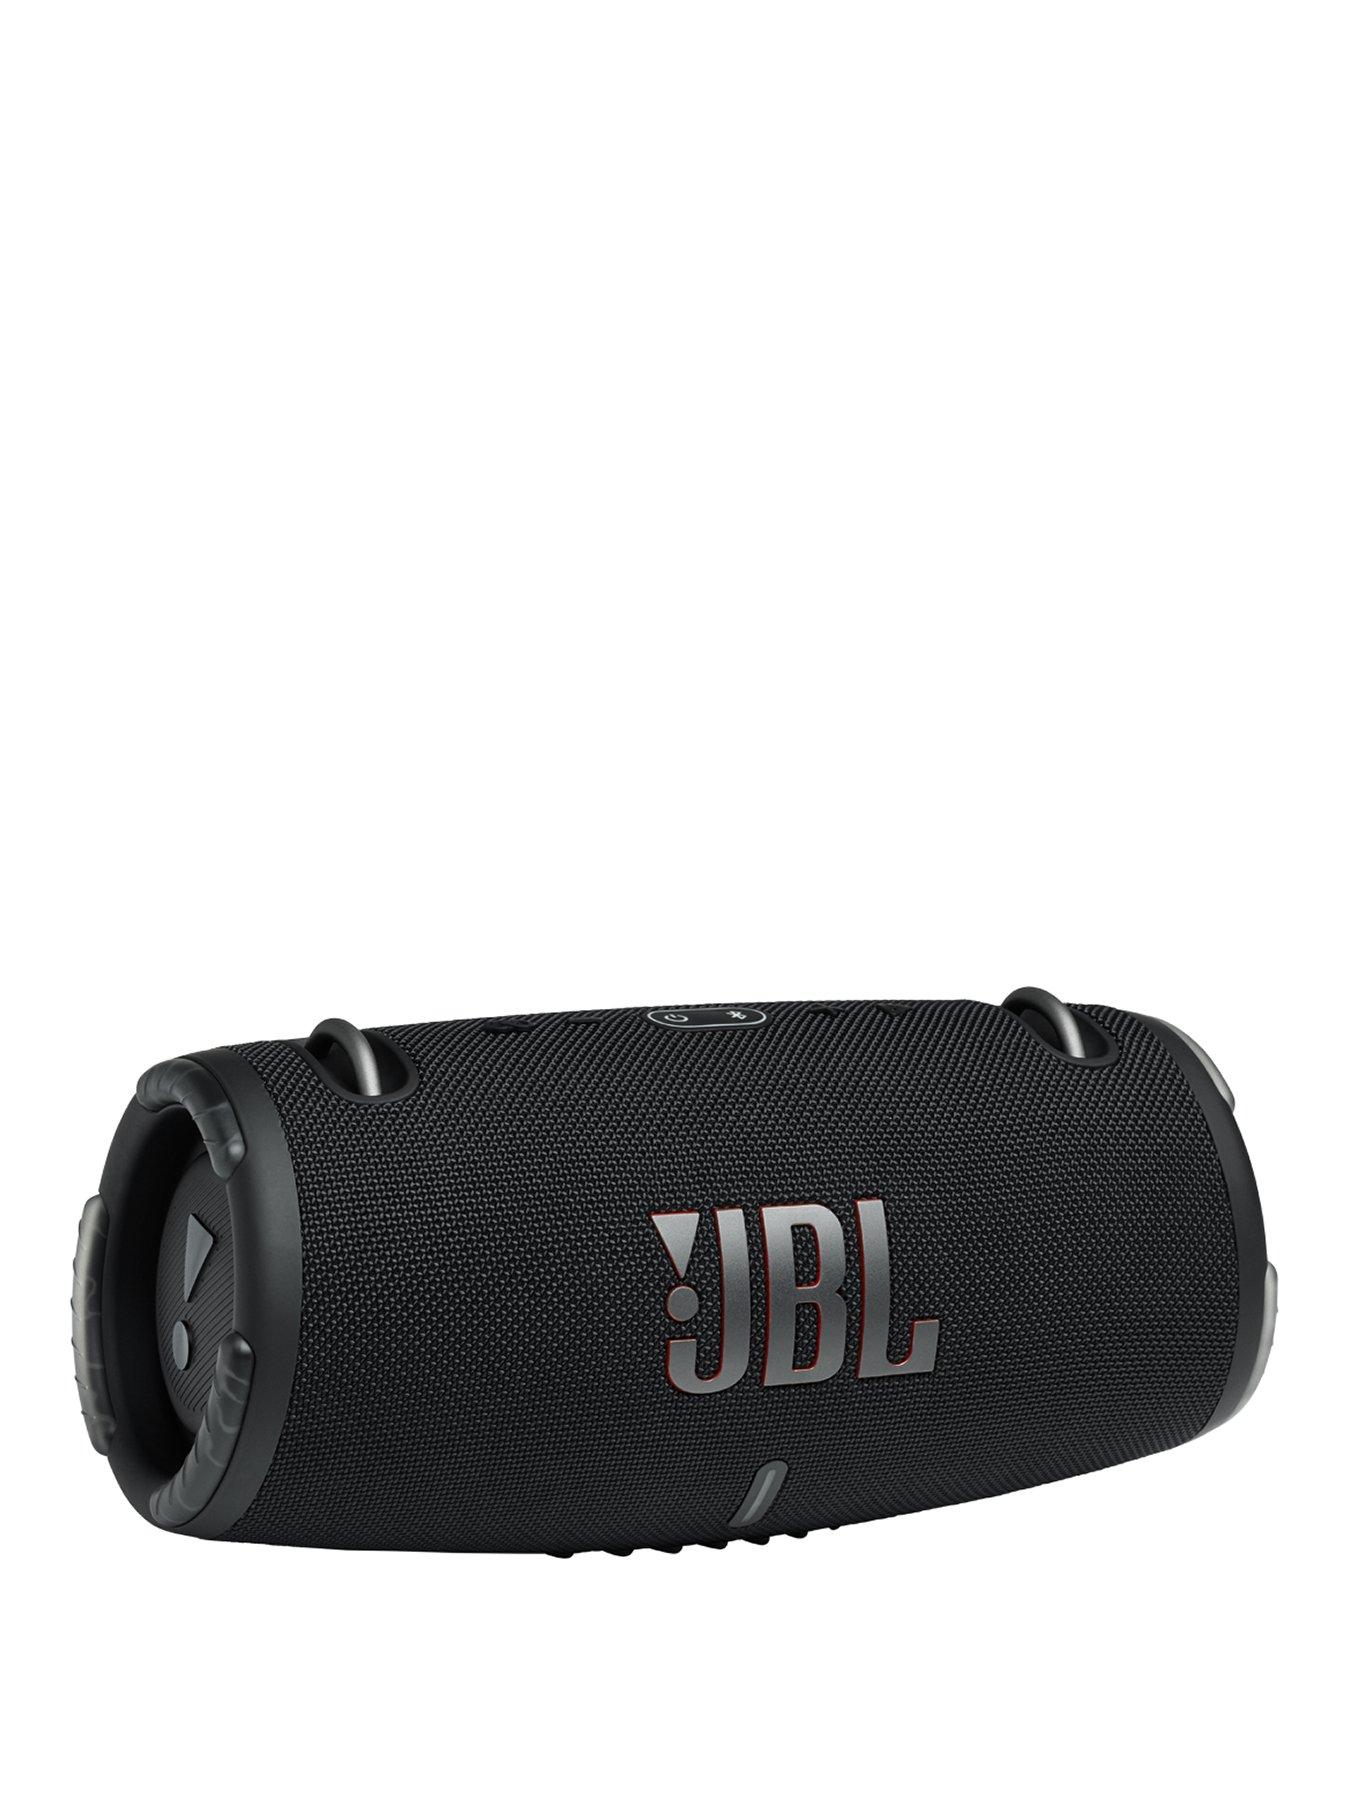 JBL Partybox 710 - Mega powerful 800W Party Speaker on wheels